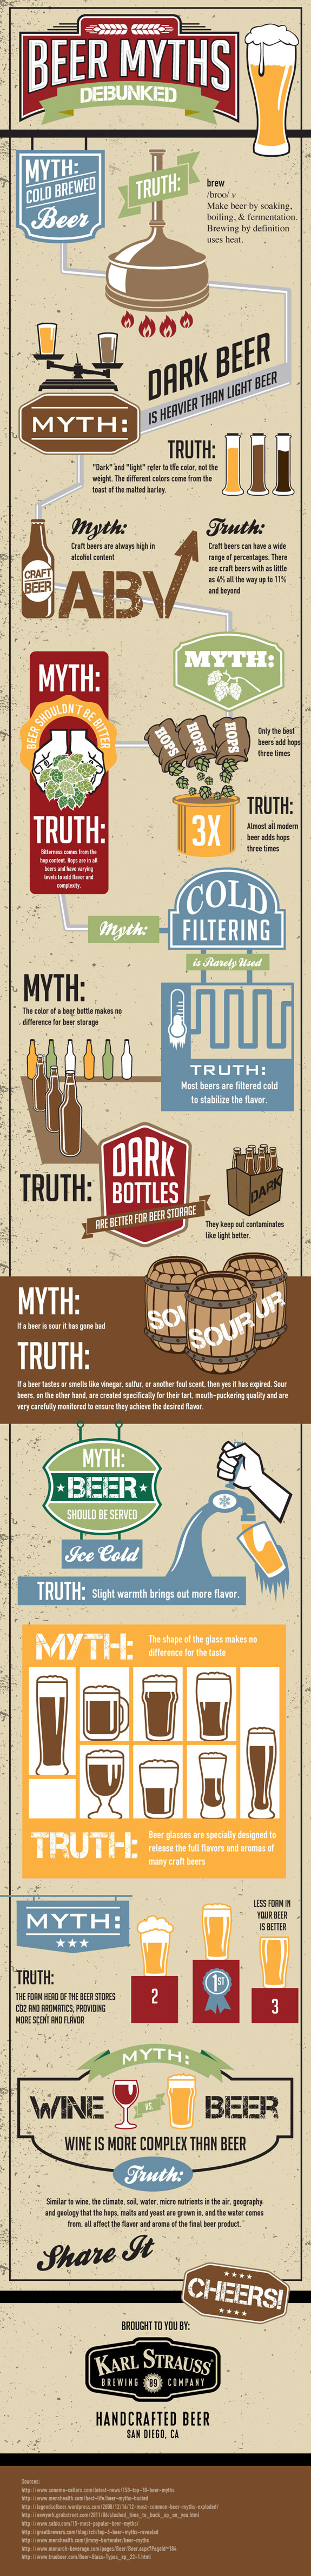 Karl Strauss Craft Beer Myths Infographic